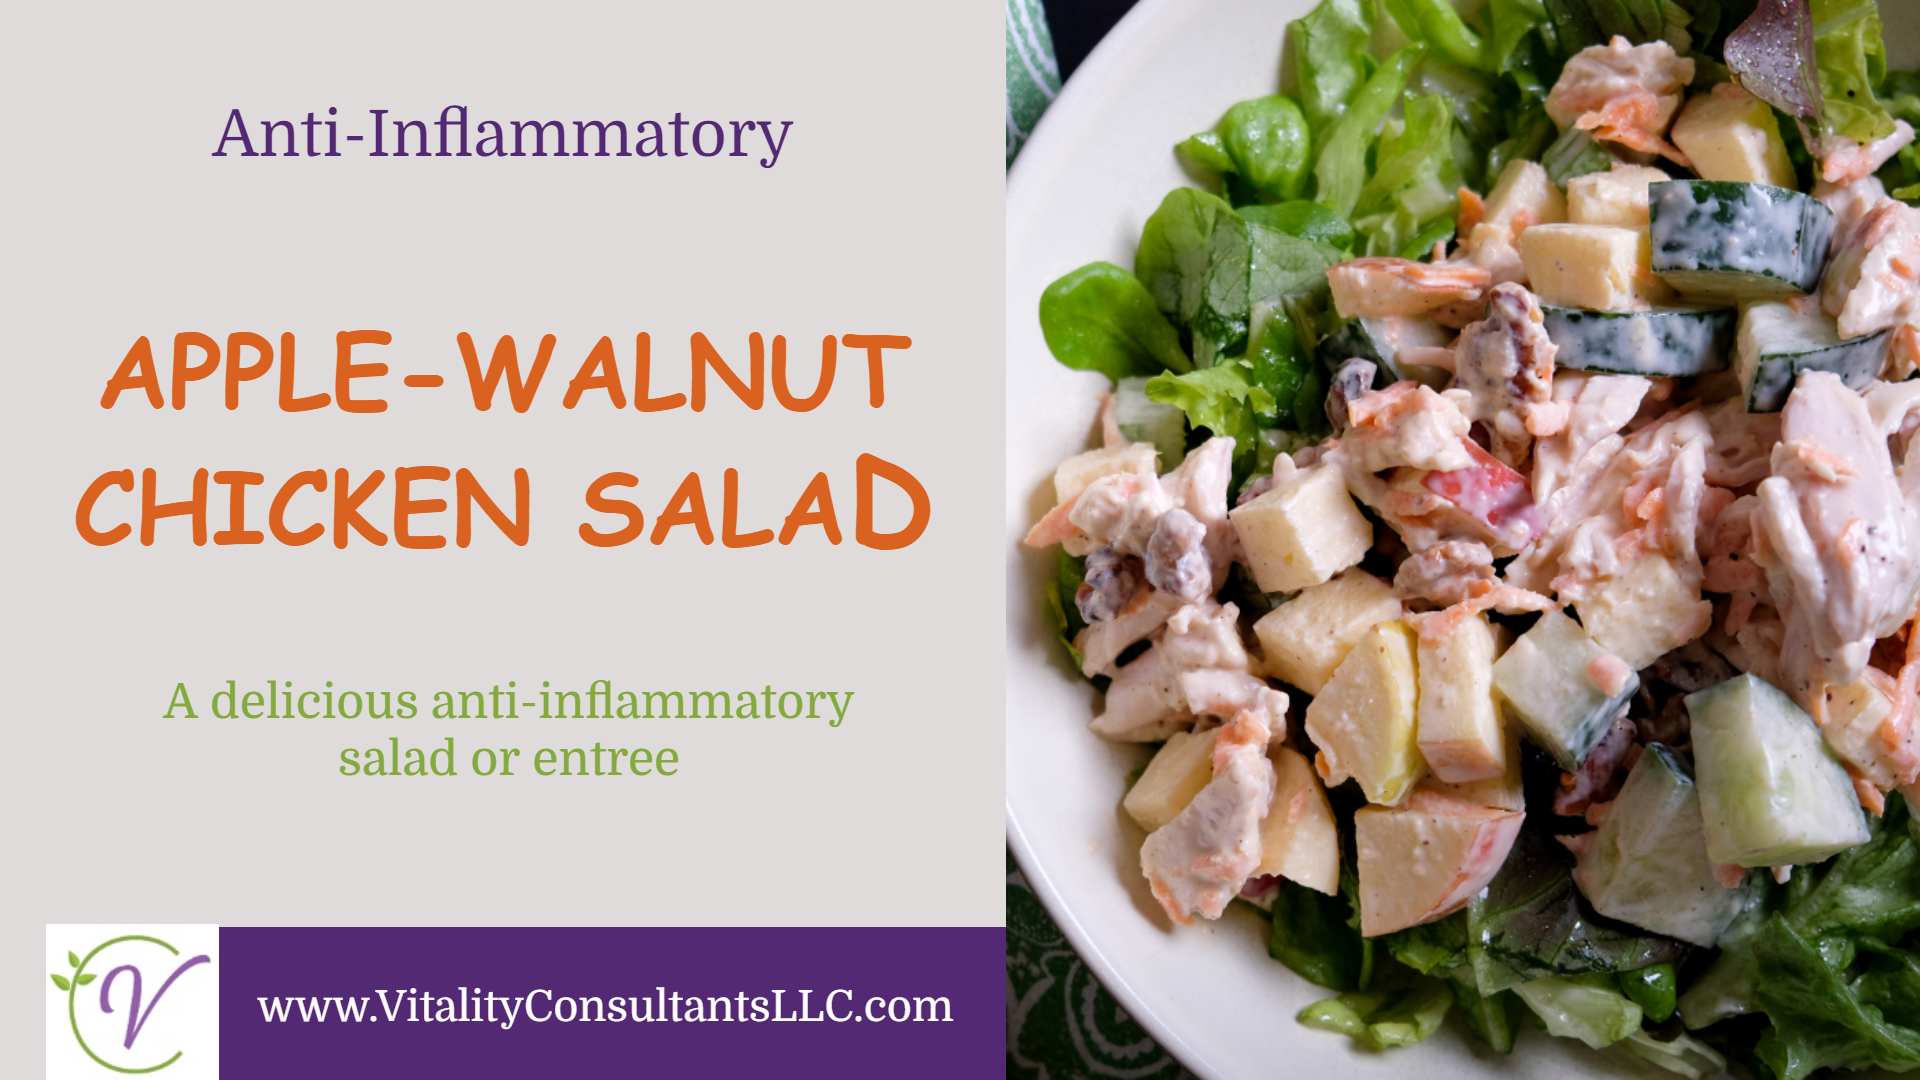 Apple-Walnut Chicken Salad